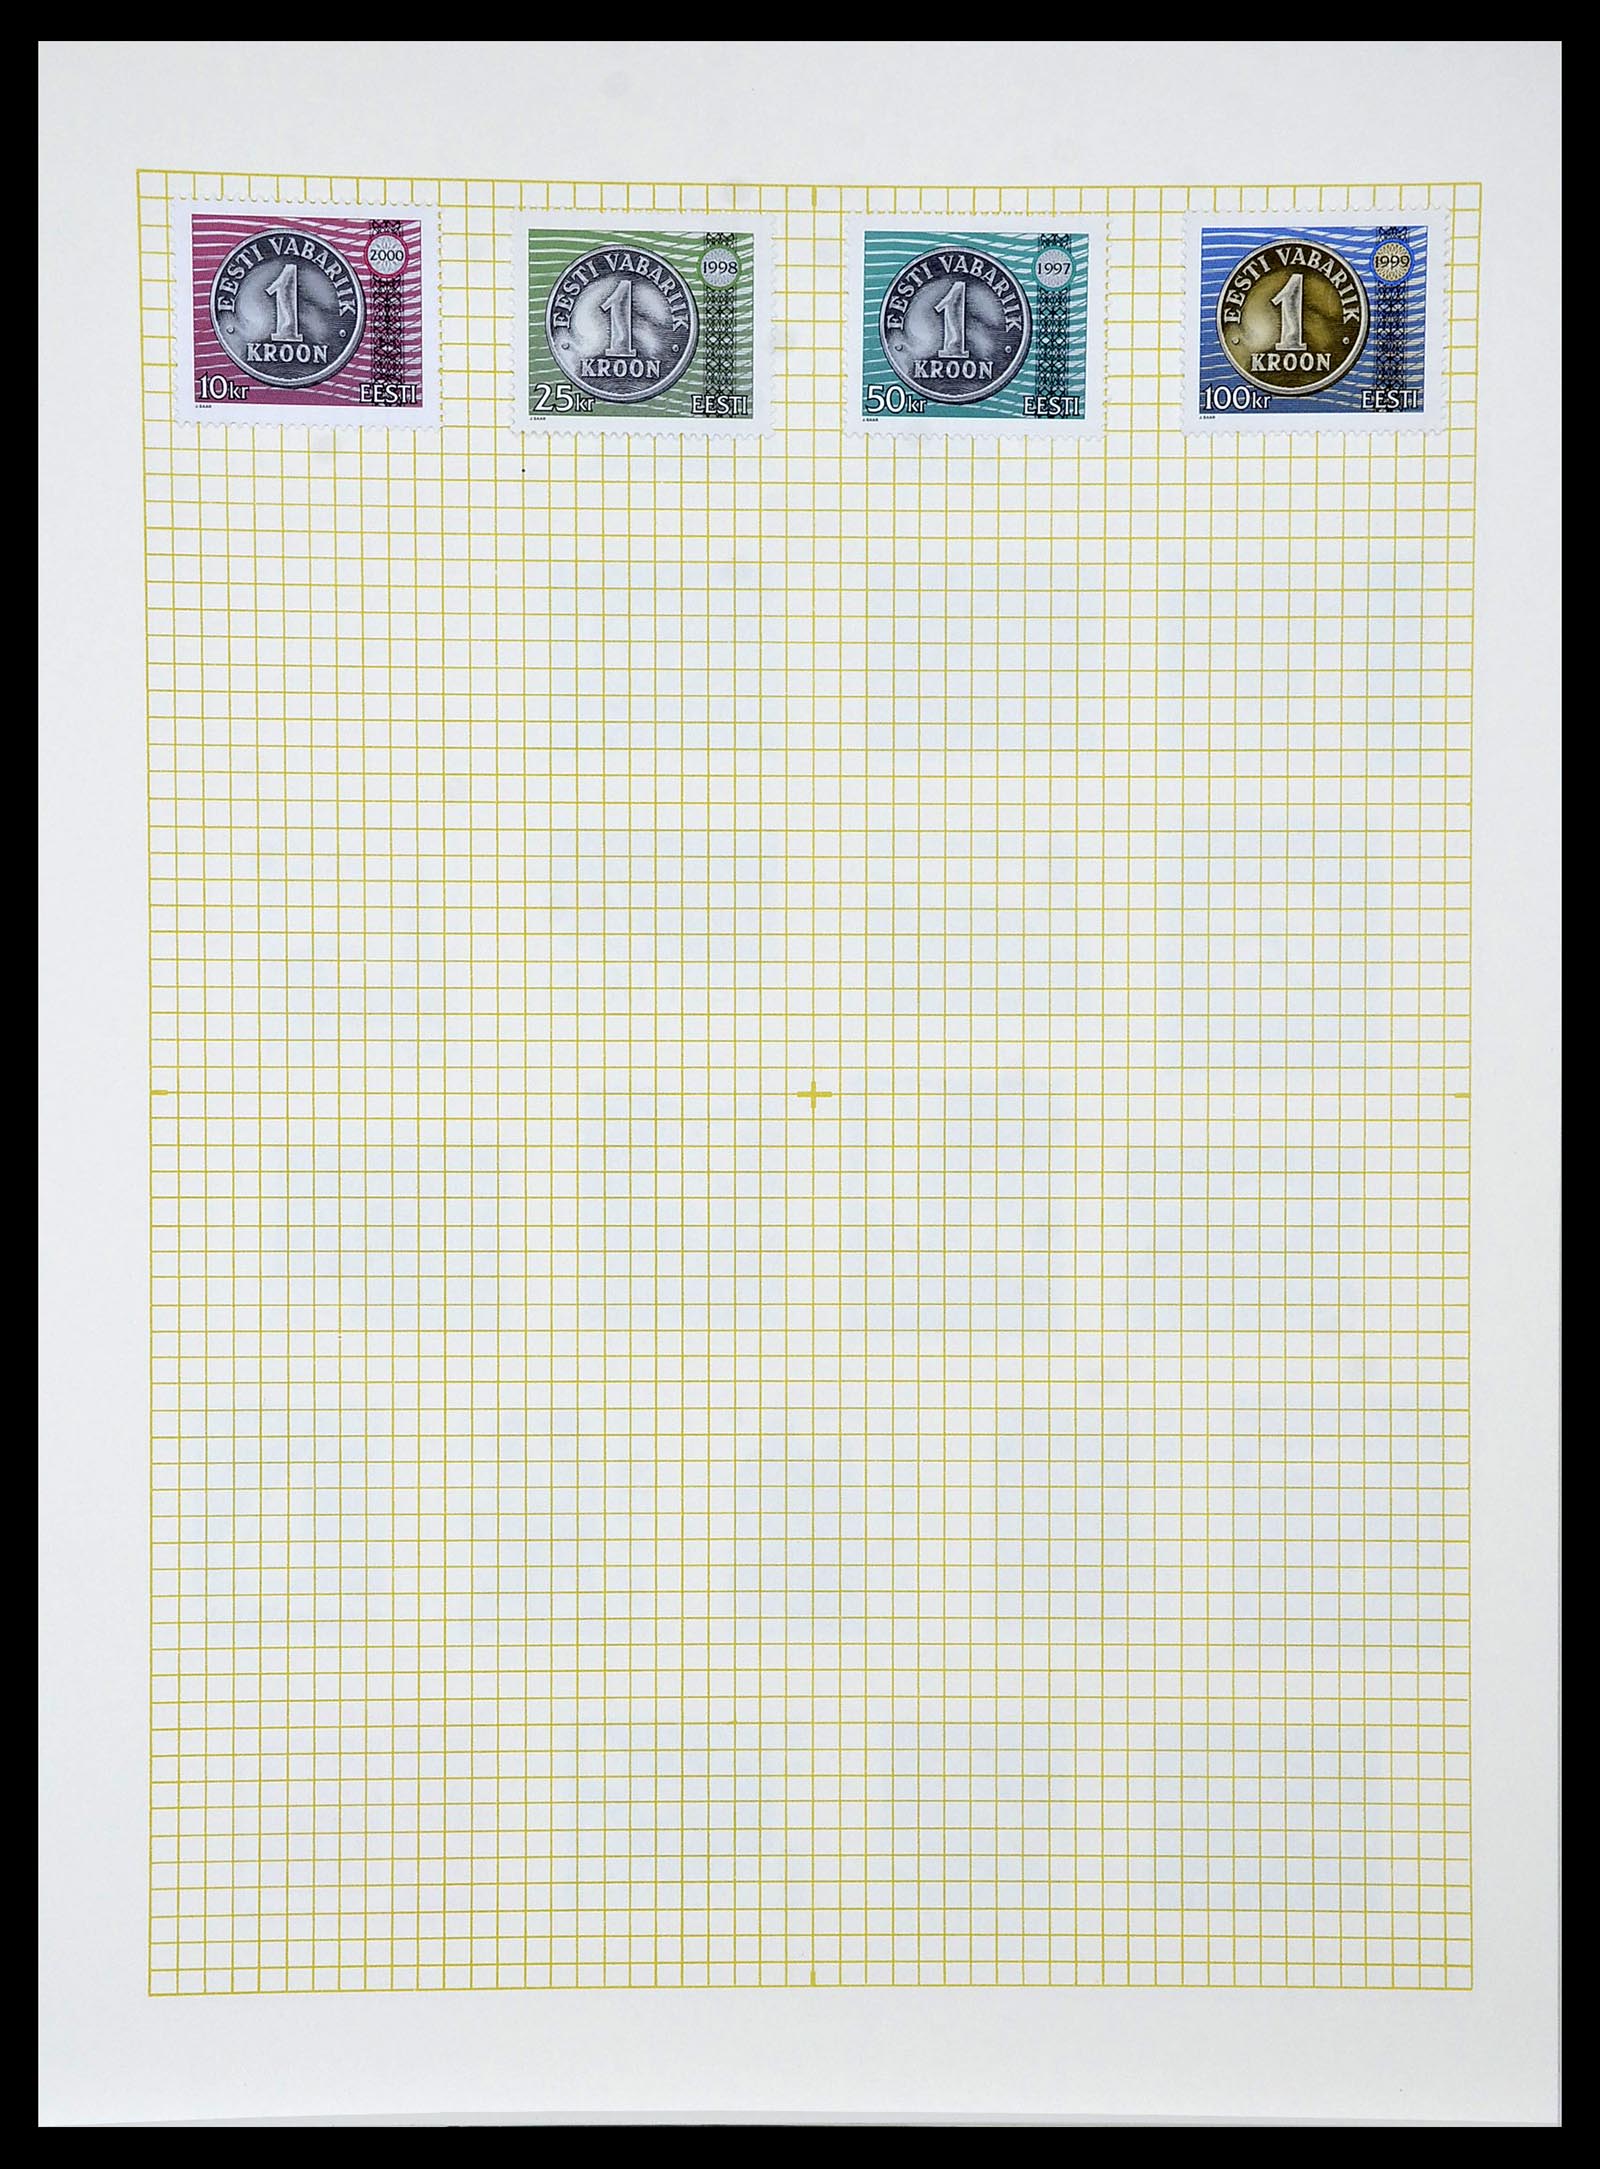 34139 035 - Stamp collection 34139 Estonia 1918-2002.